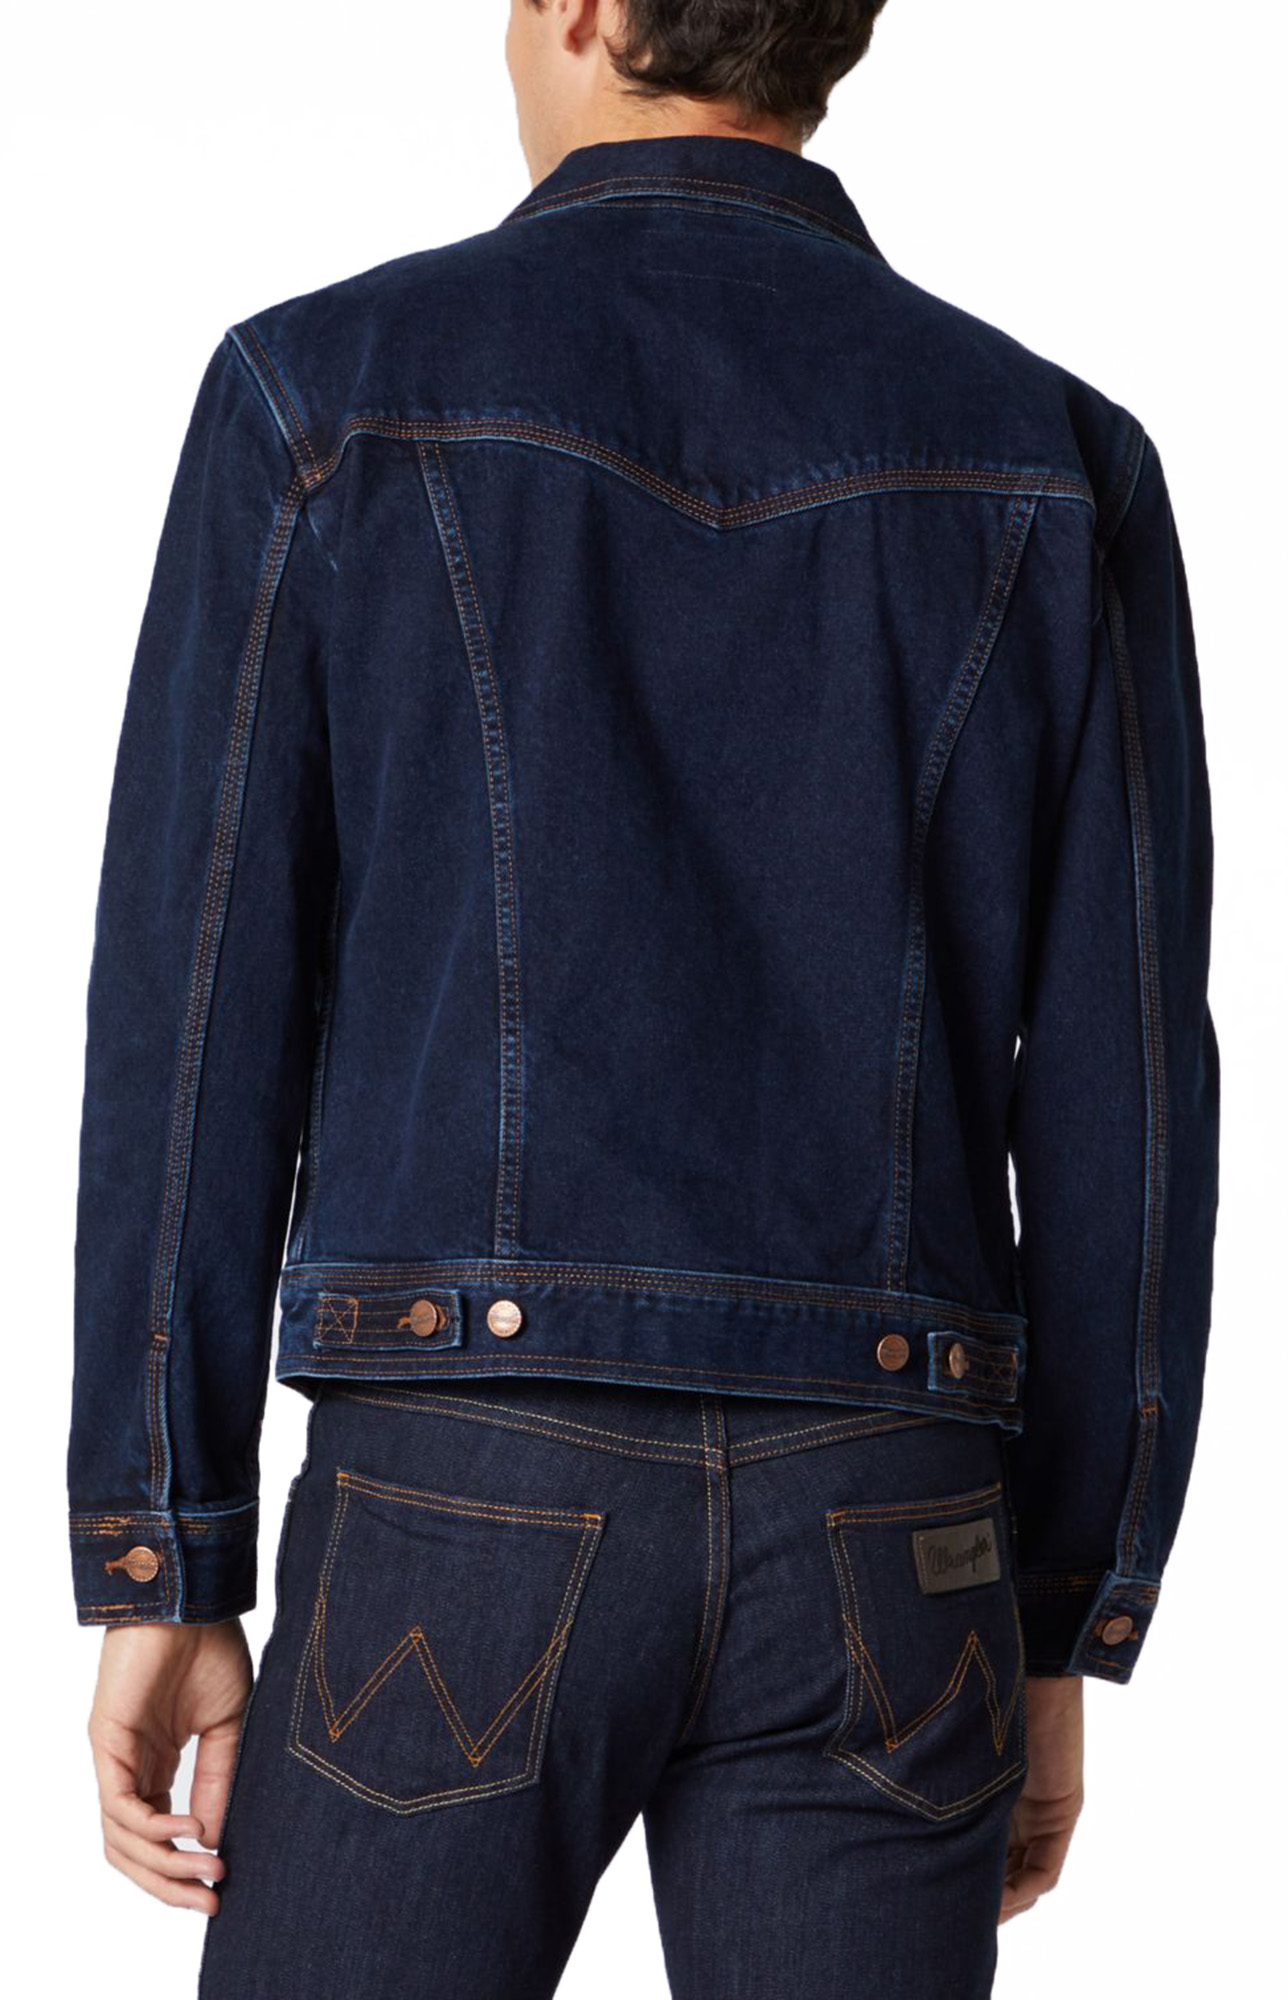 Wrangler New Mens Authentic Denim Trucker Jacket Vintage Dark Blue Black | eBay